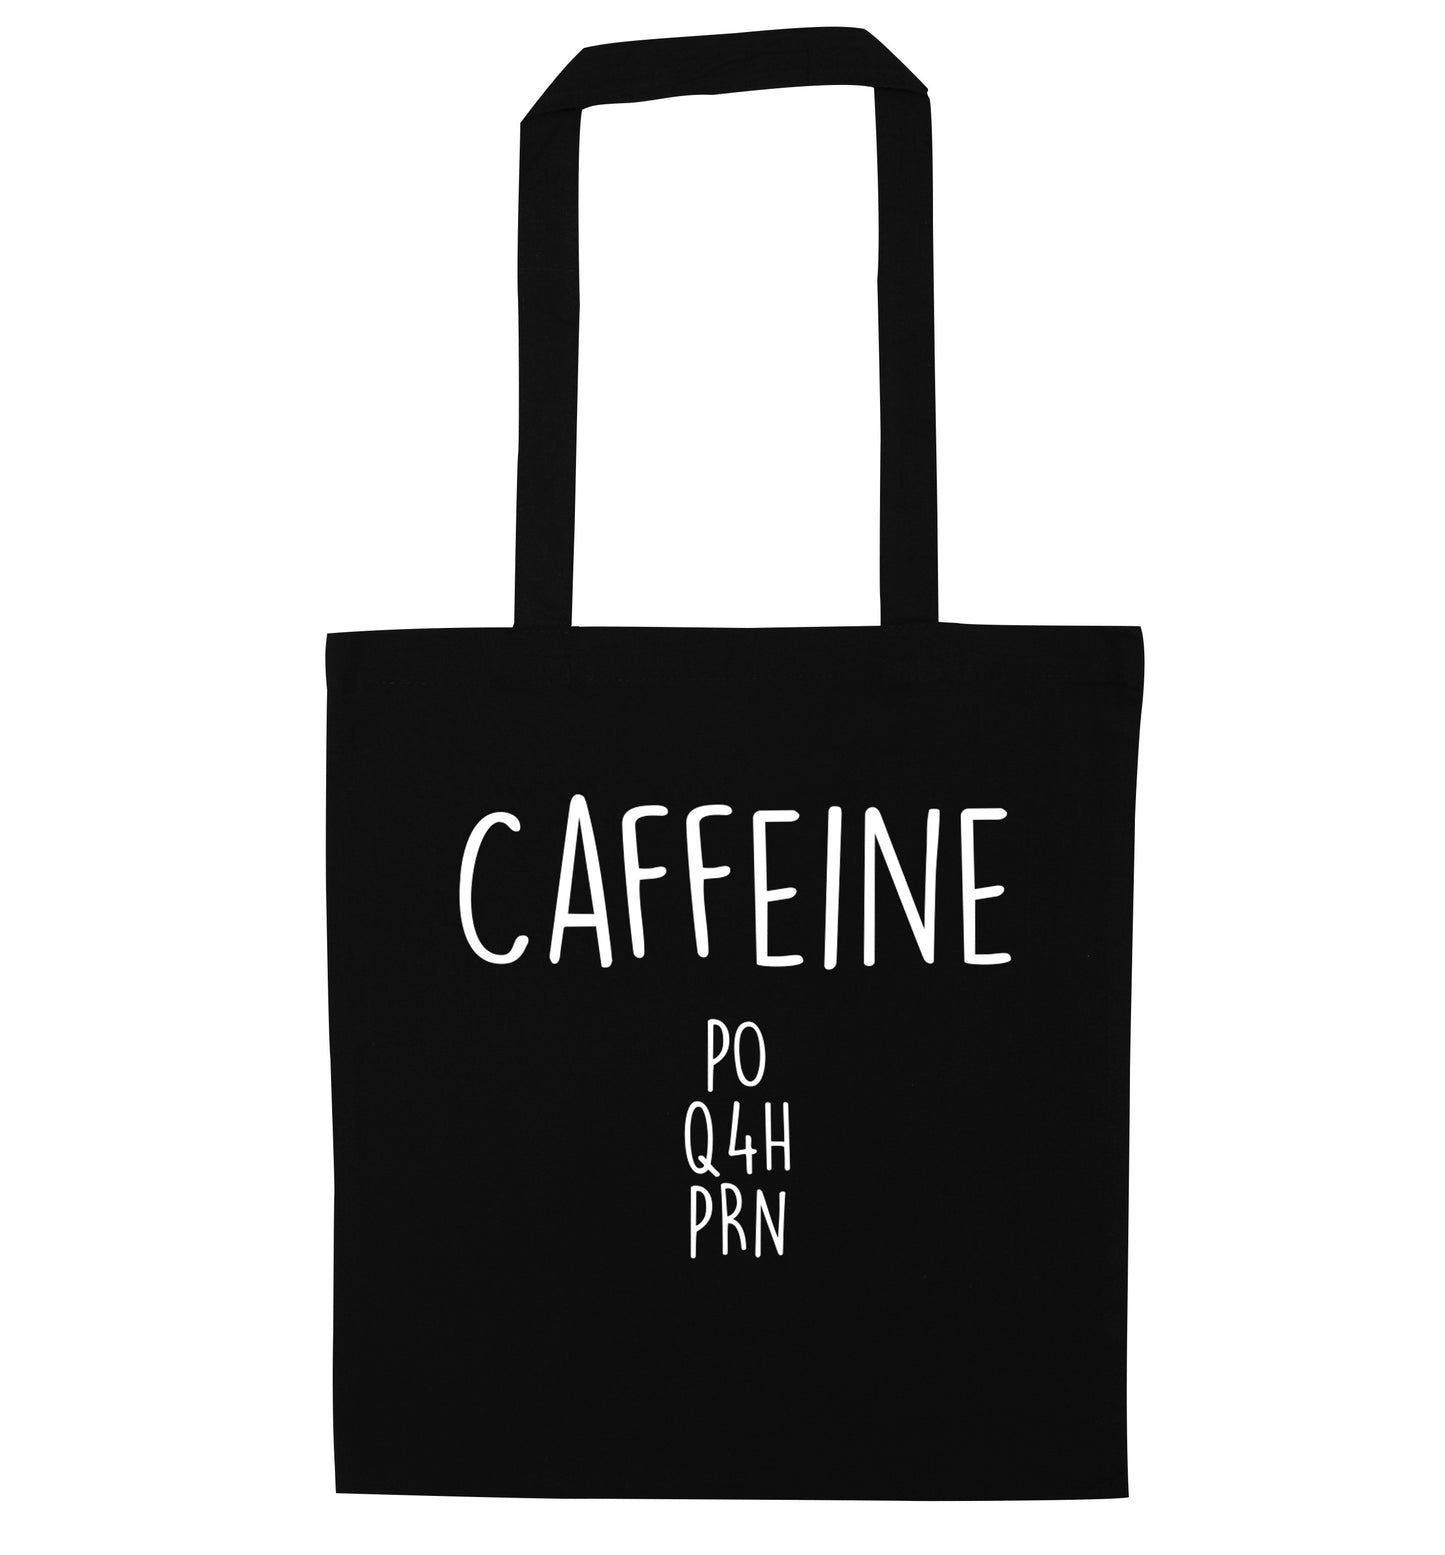 Caffeine PO Q4H PRN black tote bag